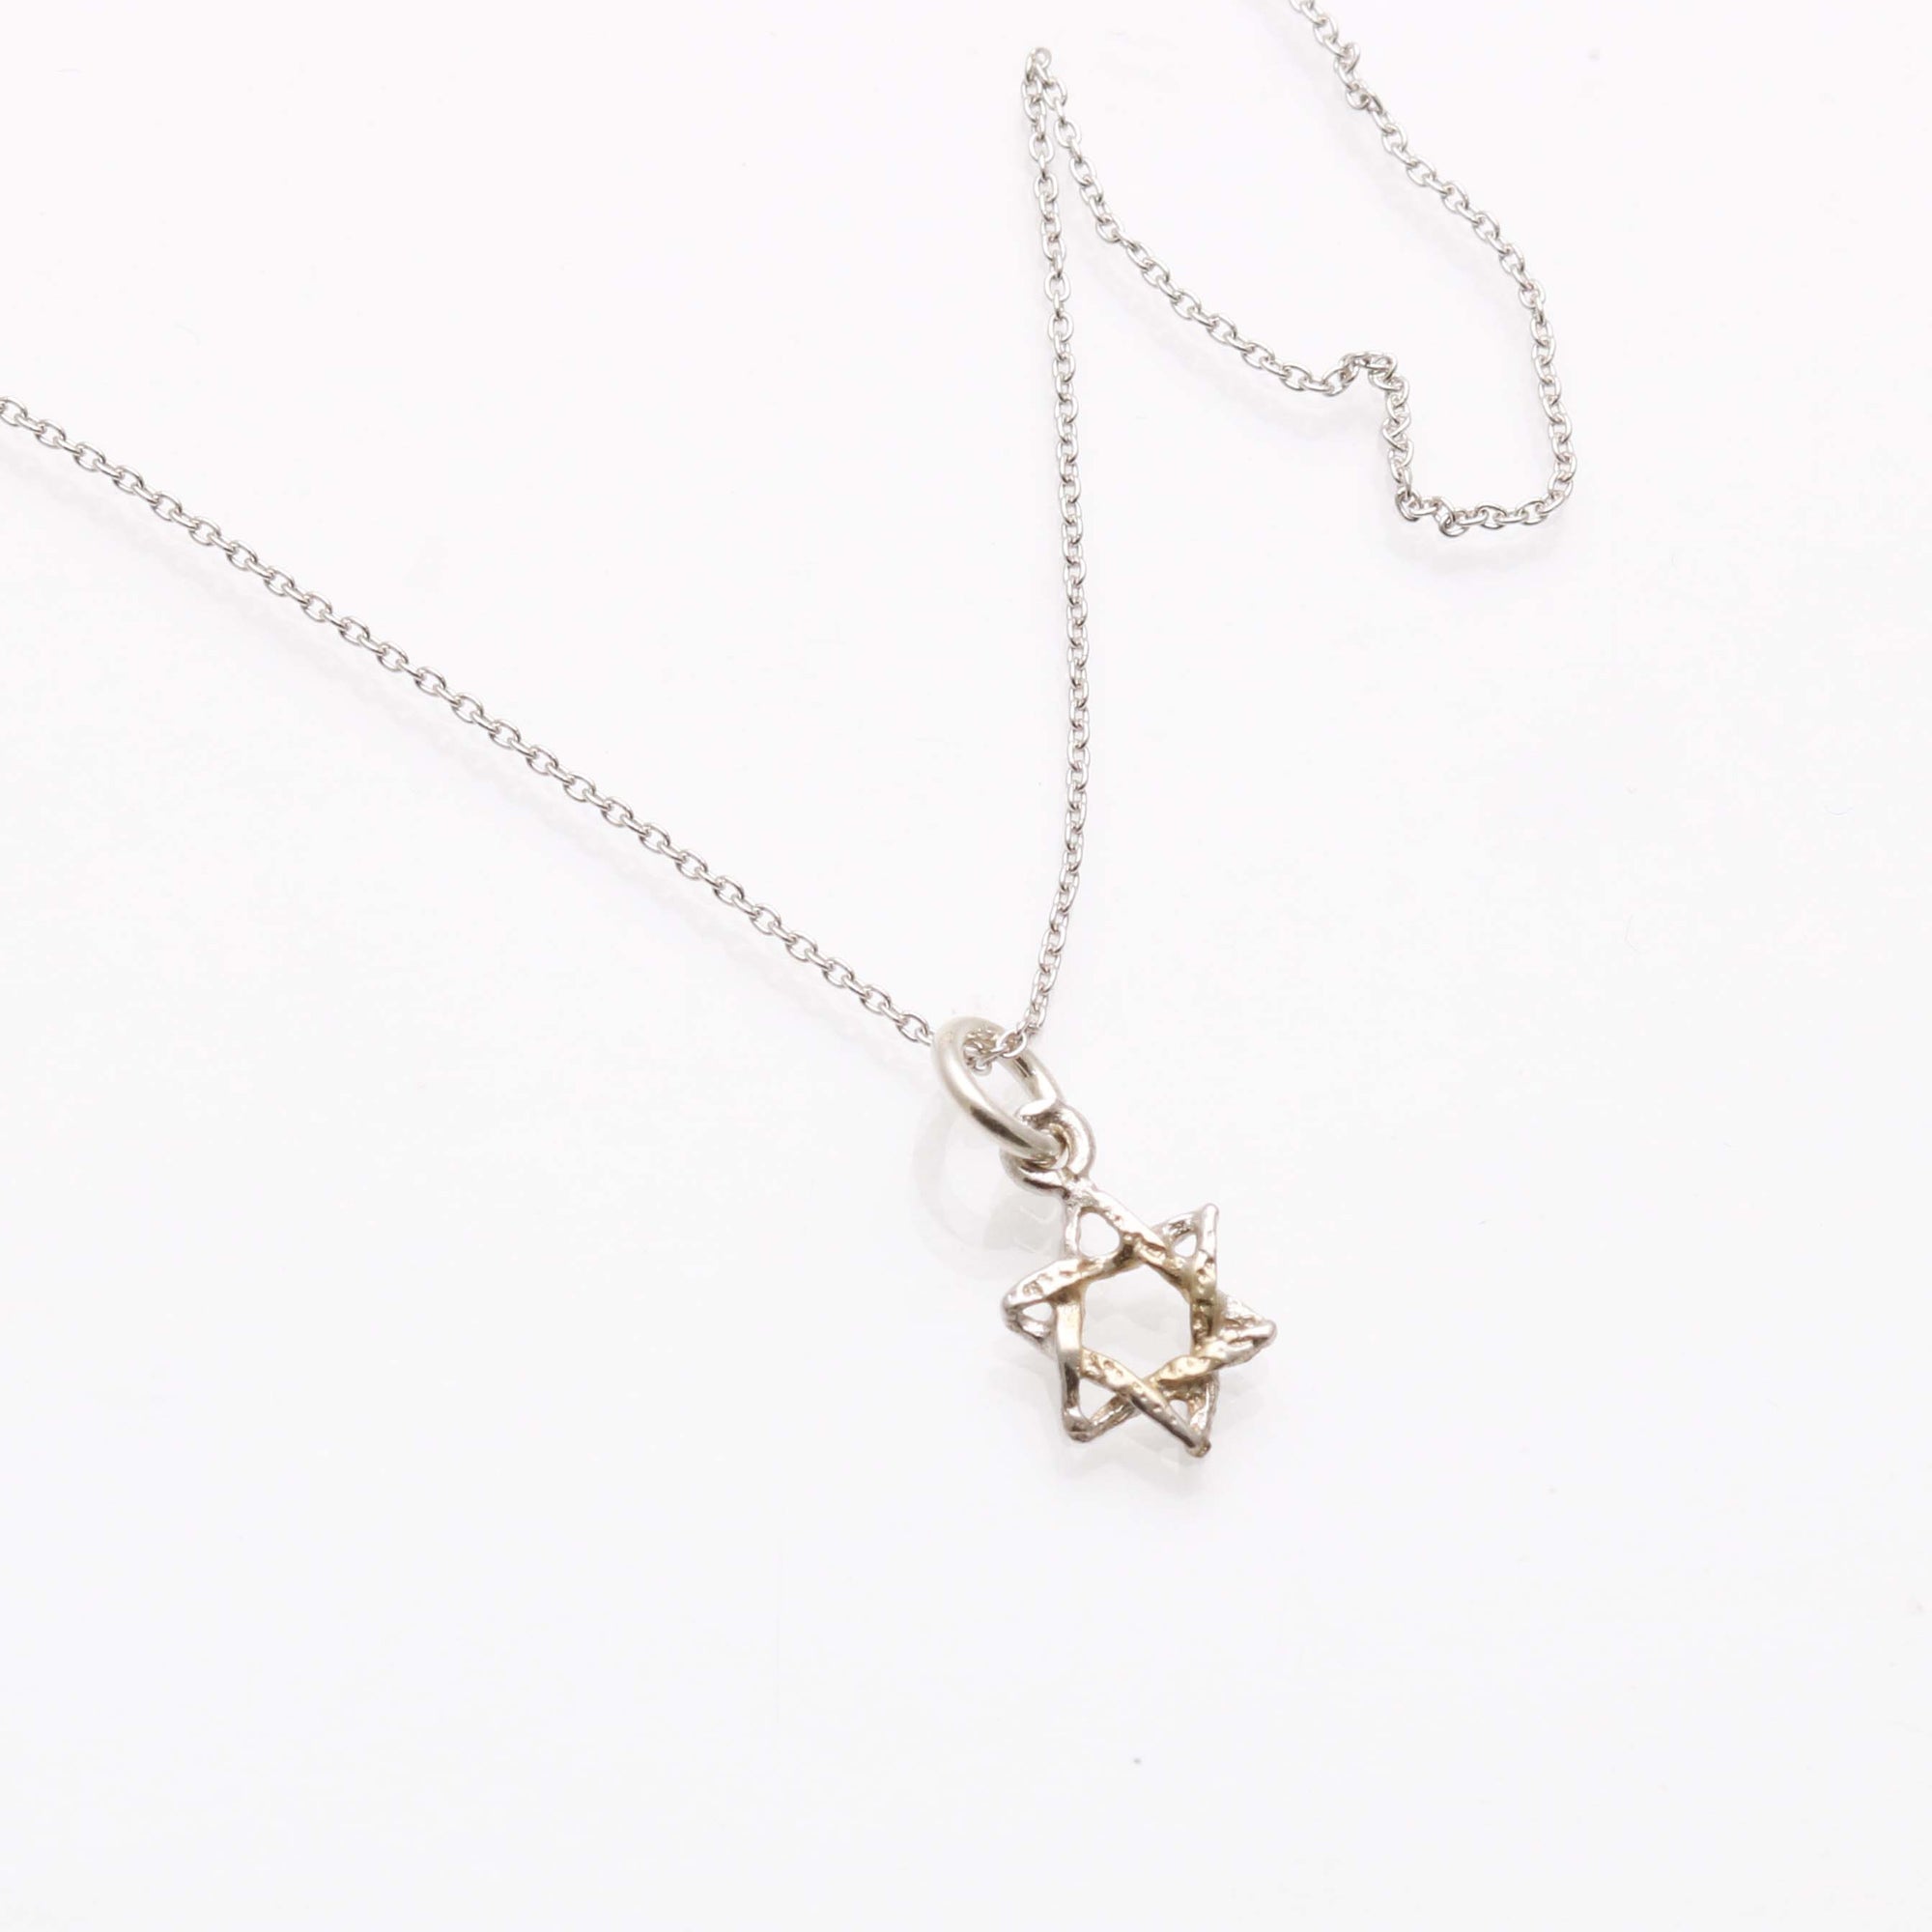 14k White gold Petite Star of David Necklace - JewelryJudaica